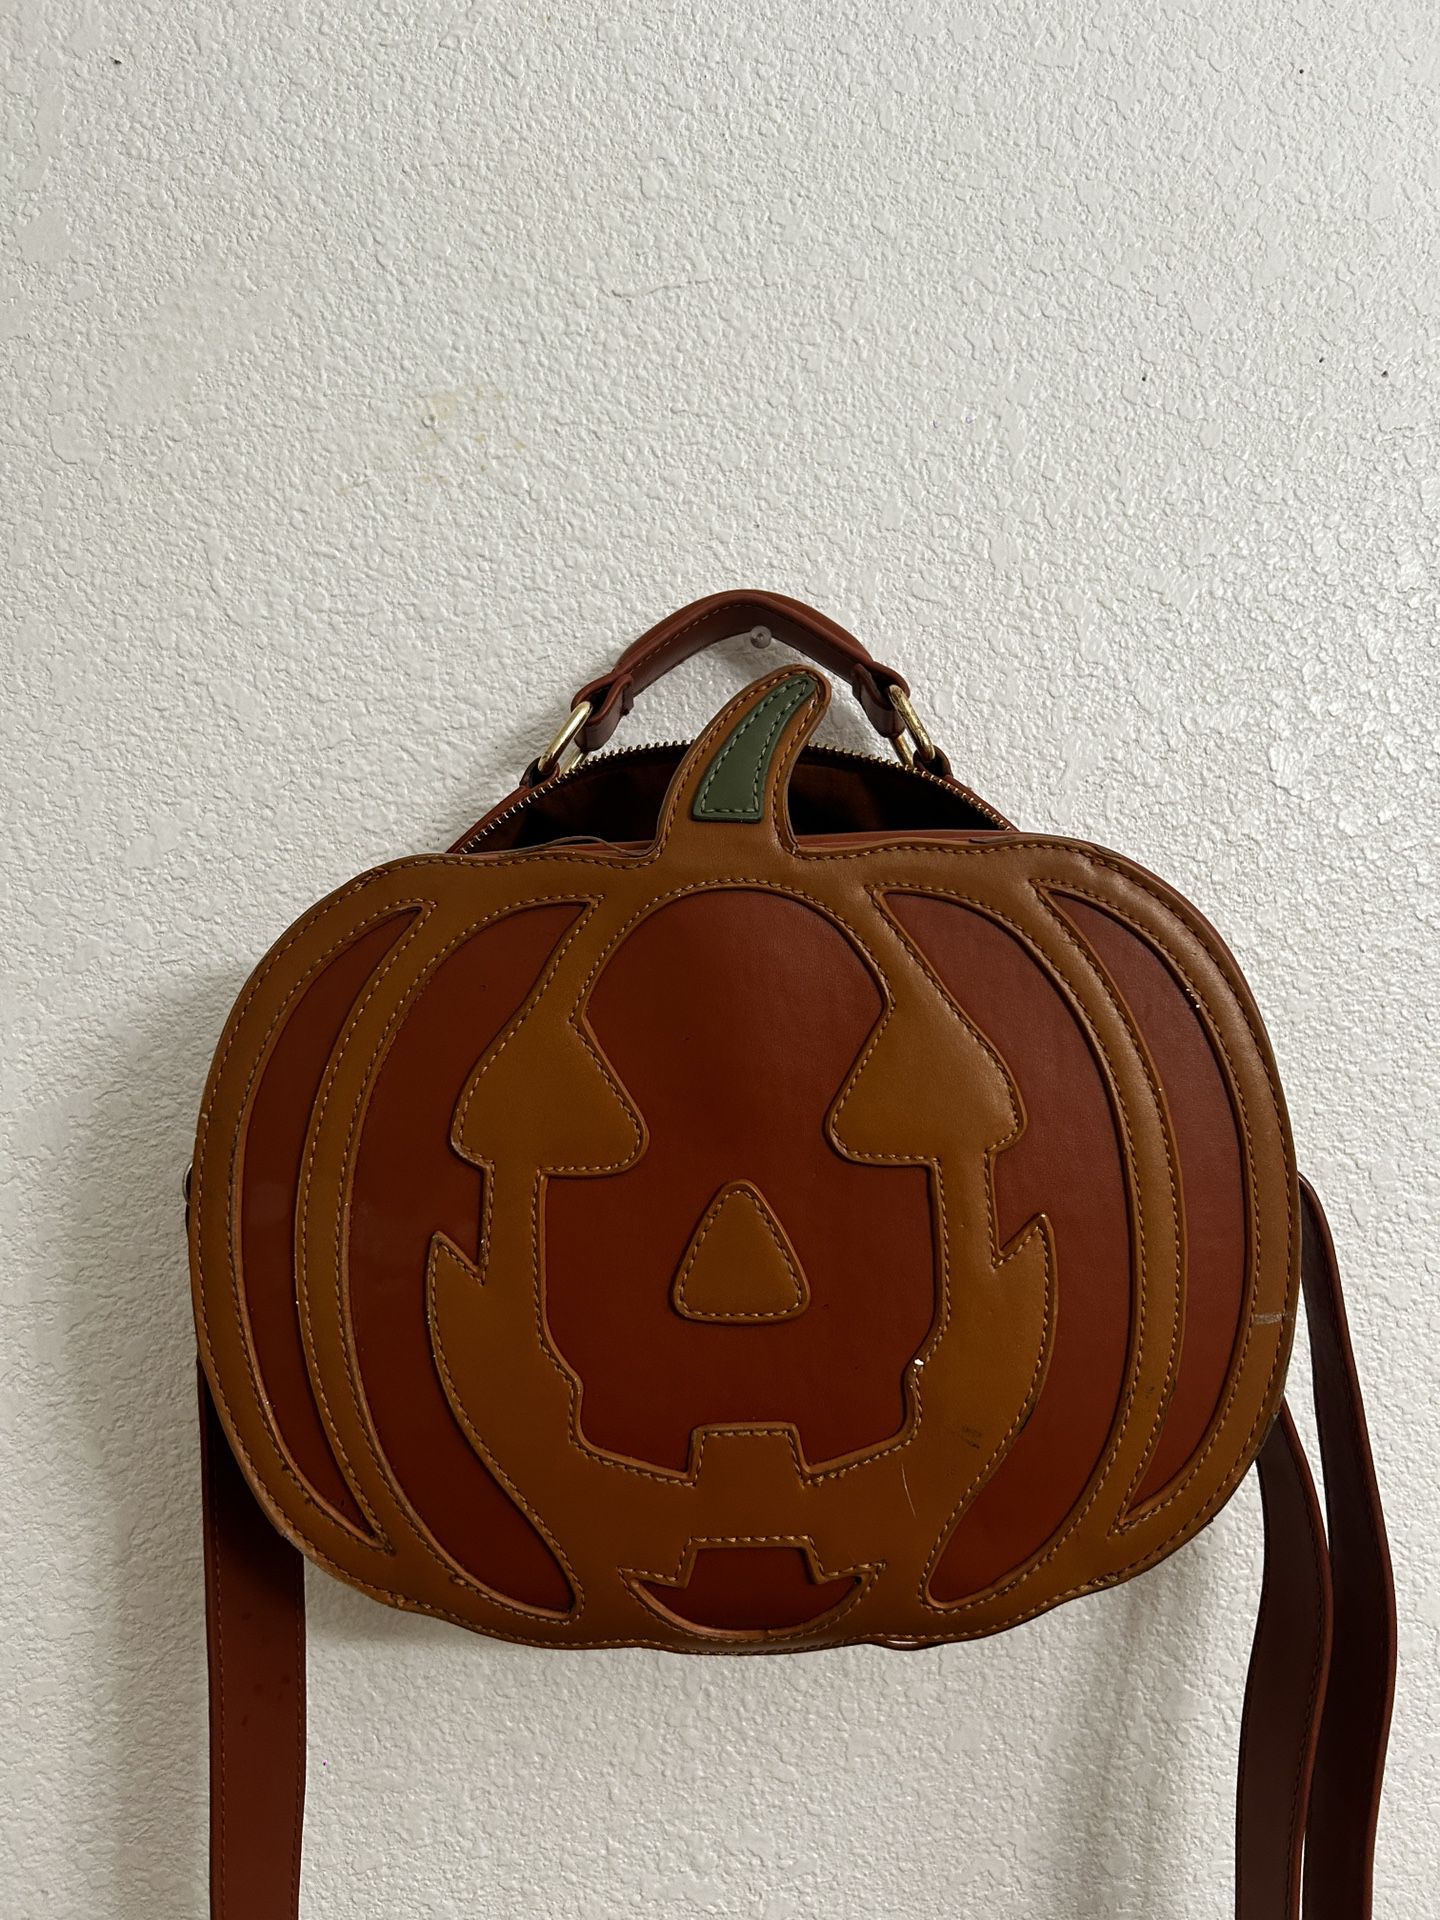 backstitchbtuja pumpkin bag 